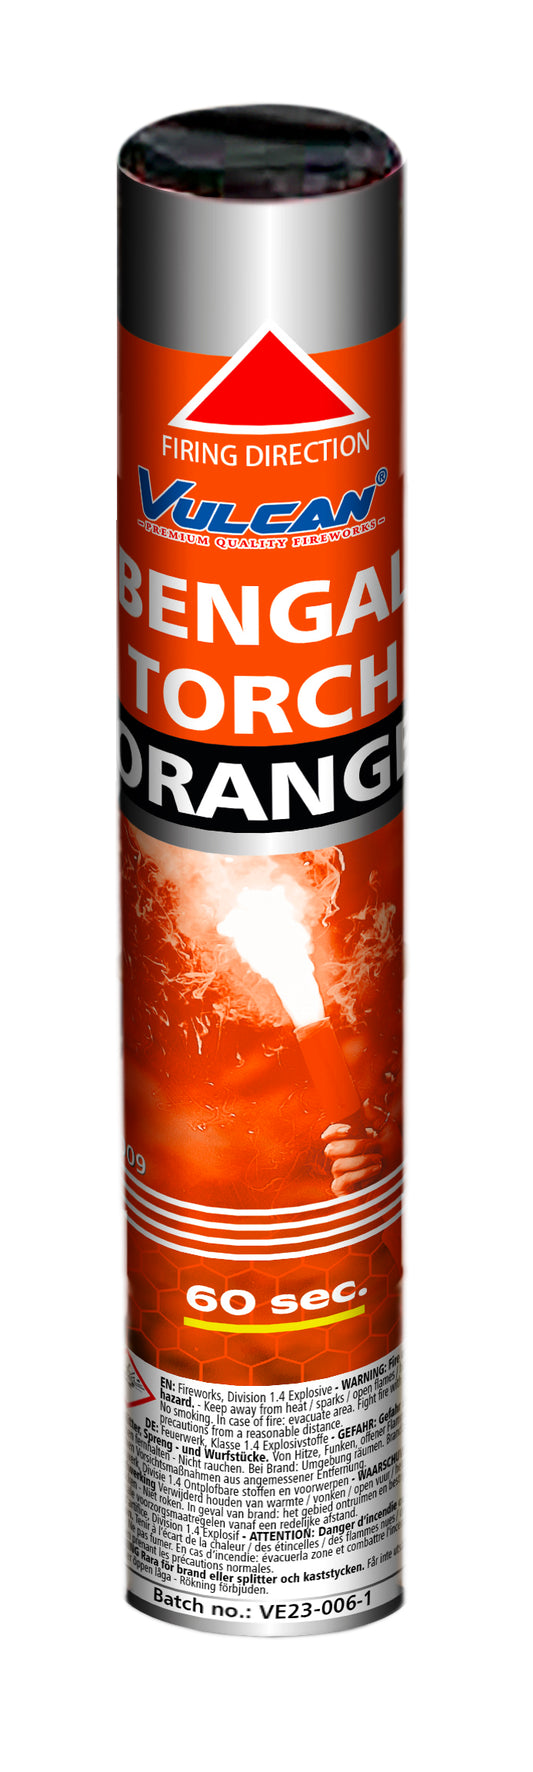 Bengal Torch Oranje